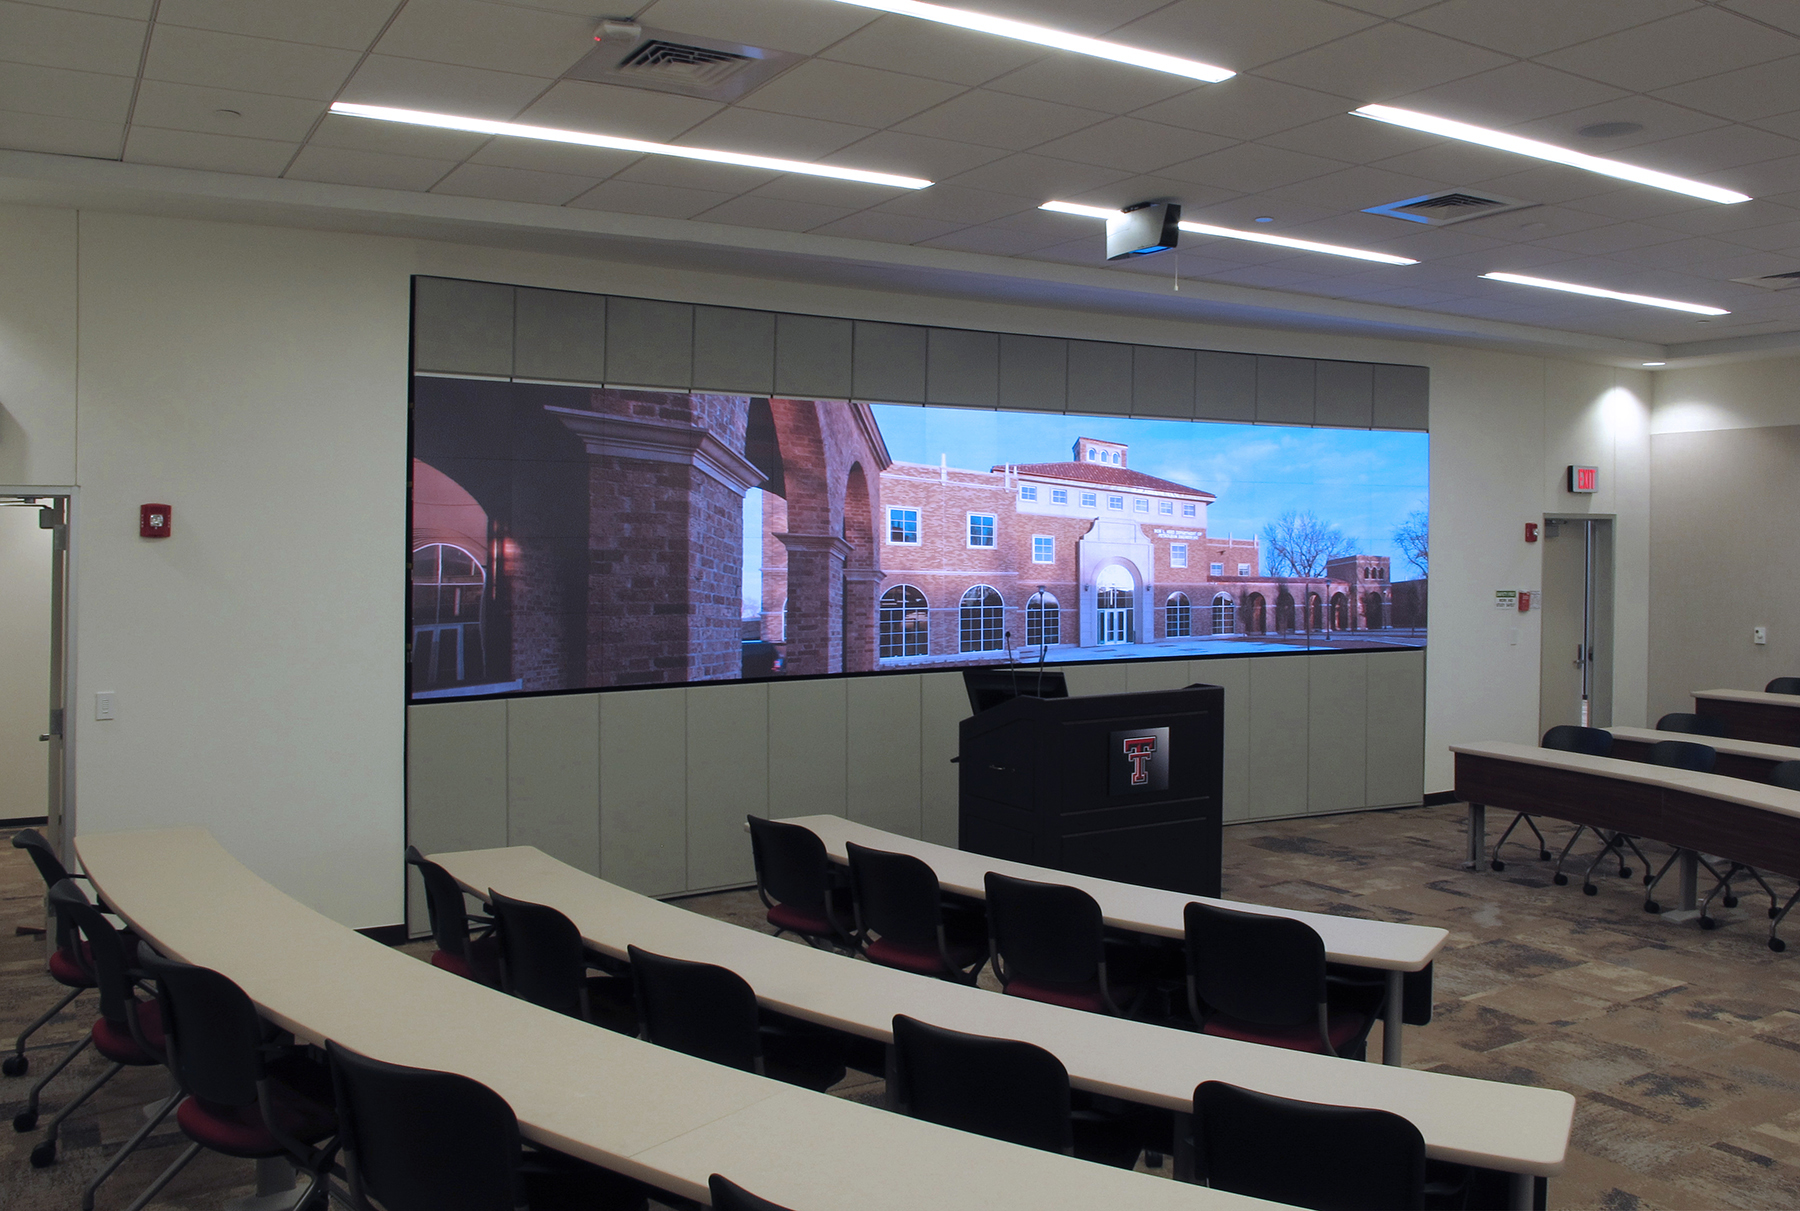 Texas Tech University’s “Smart” Learning Auditoriums Enlighten with